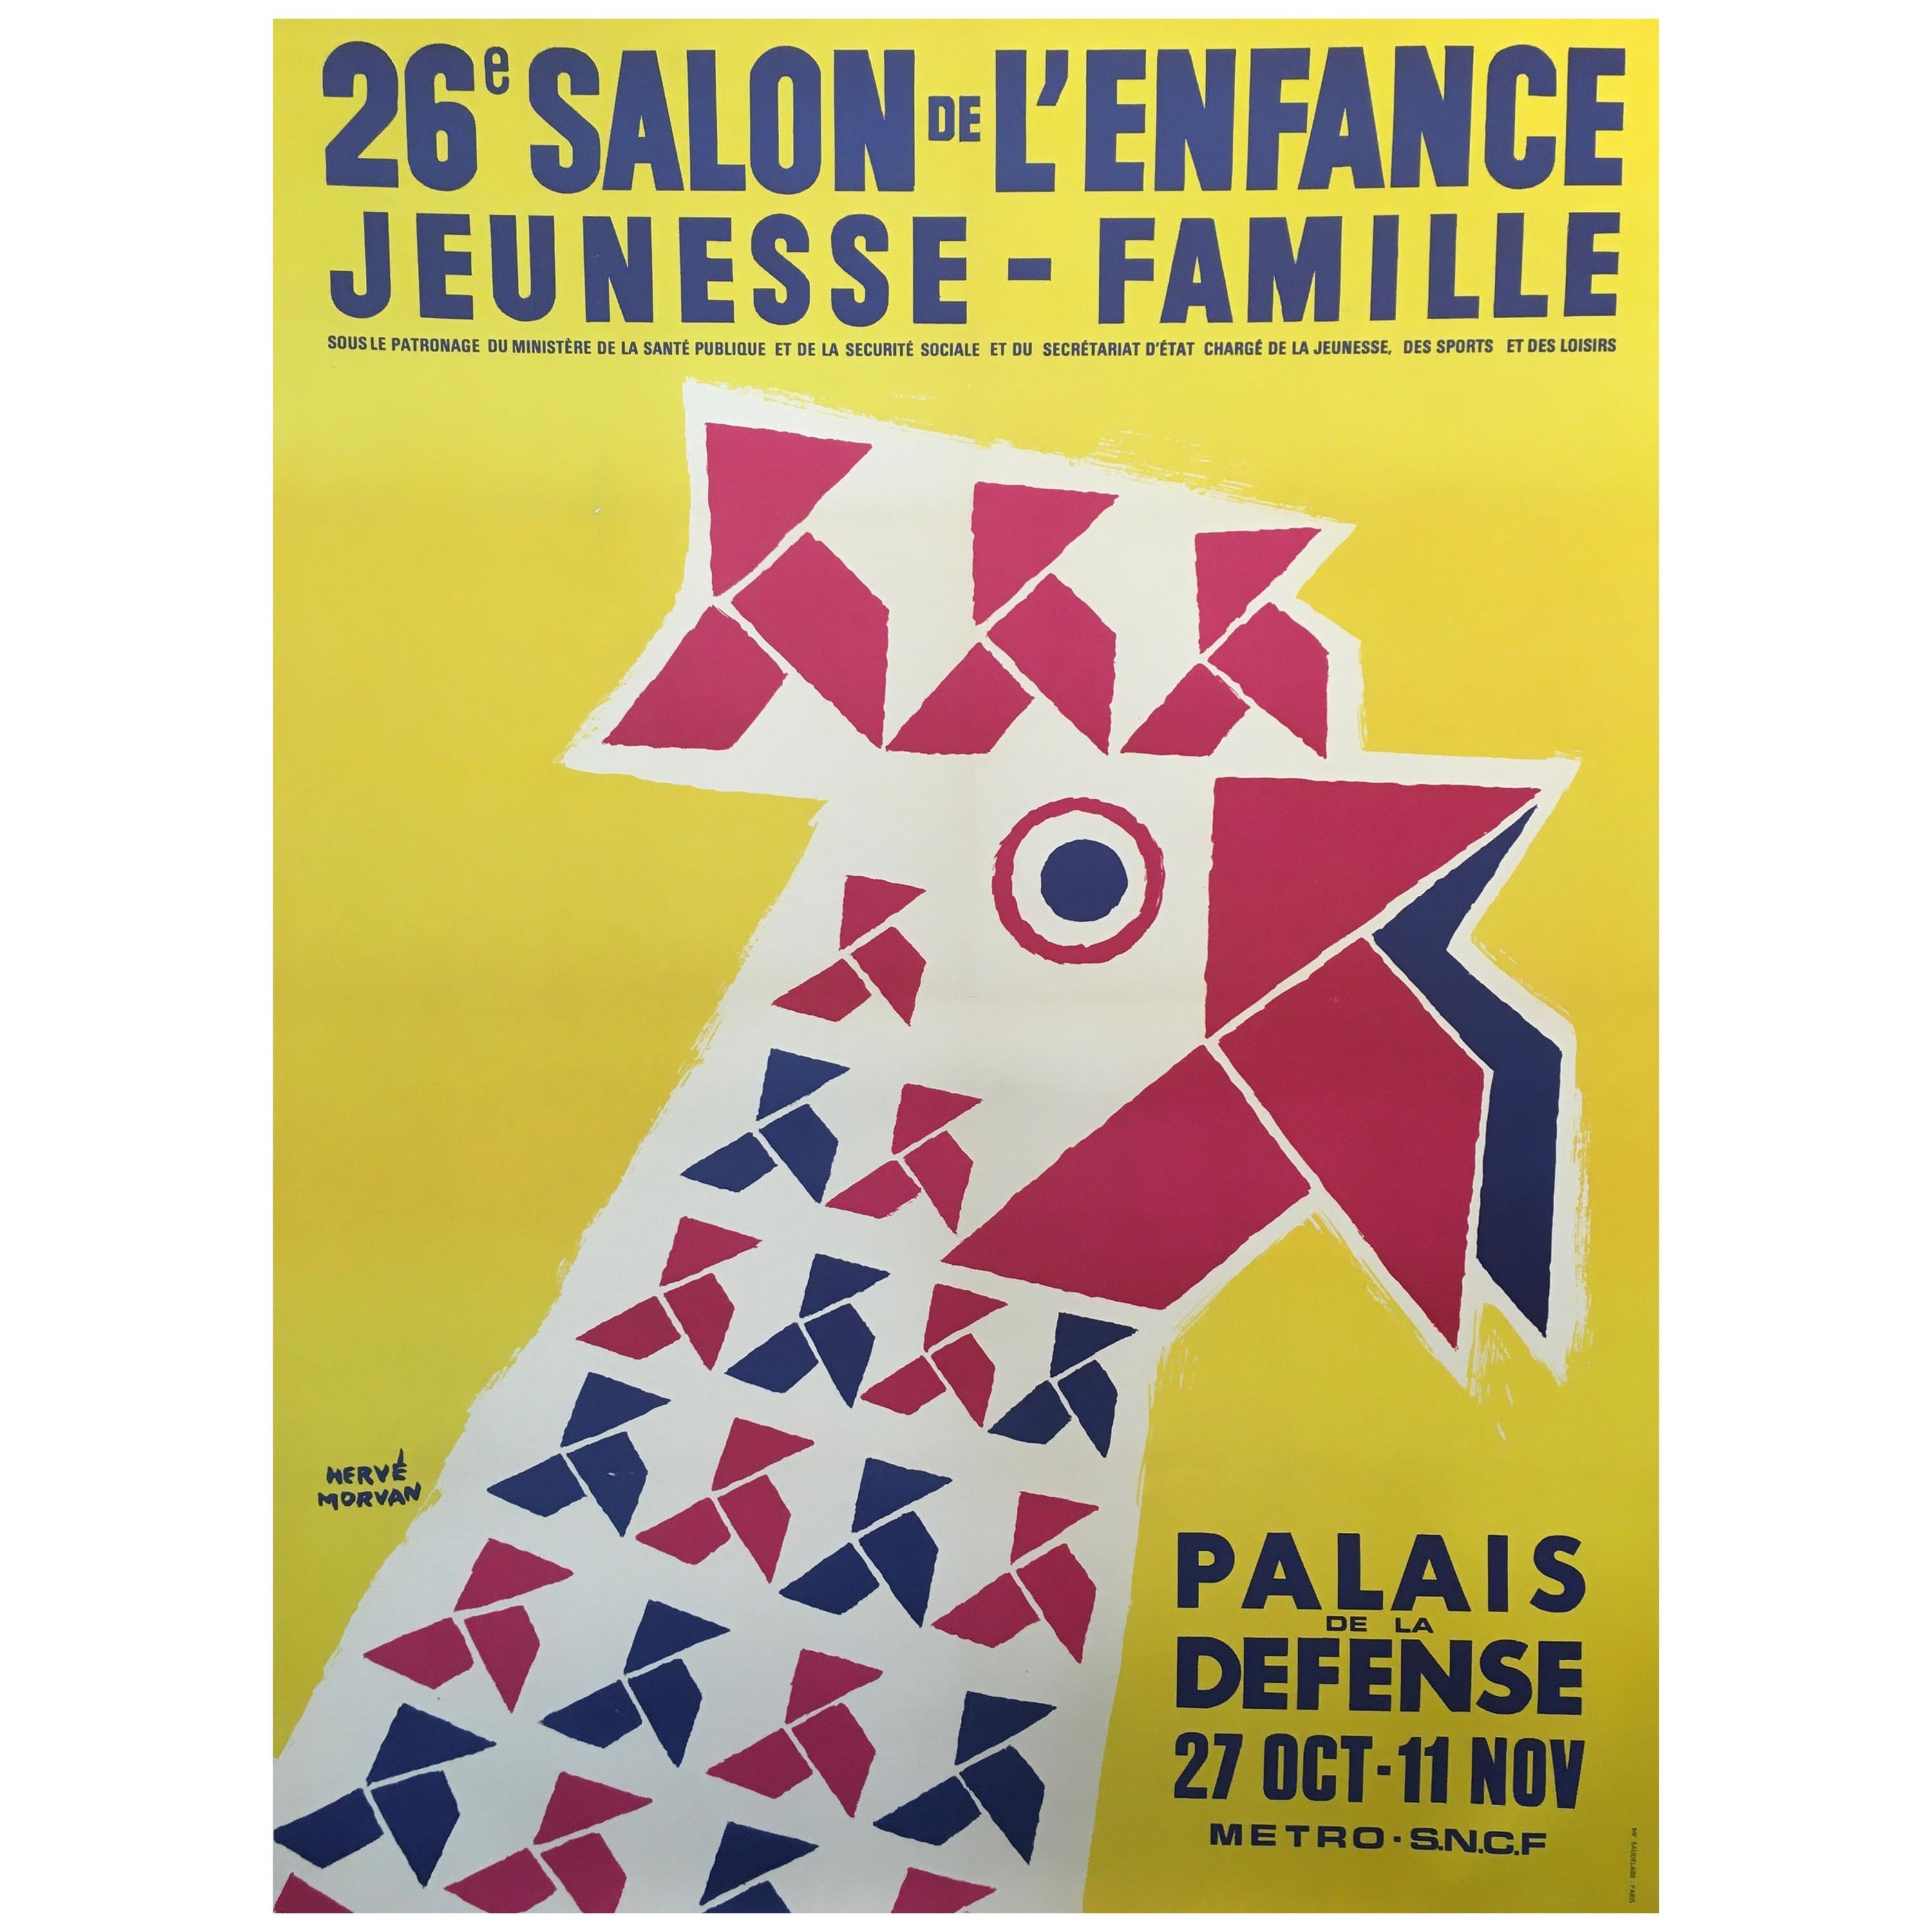 Herve Morvan Original Vintage Poster, 'Salon De L’enfance' Yellow Rooster